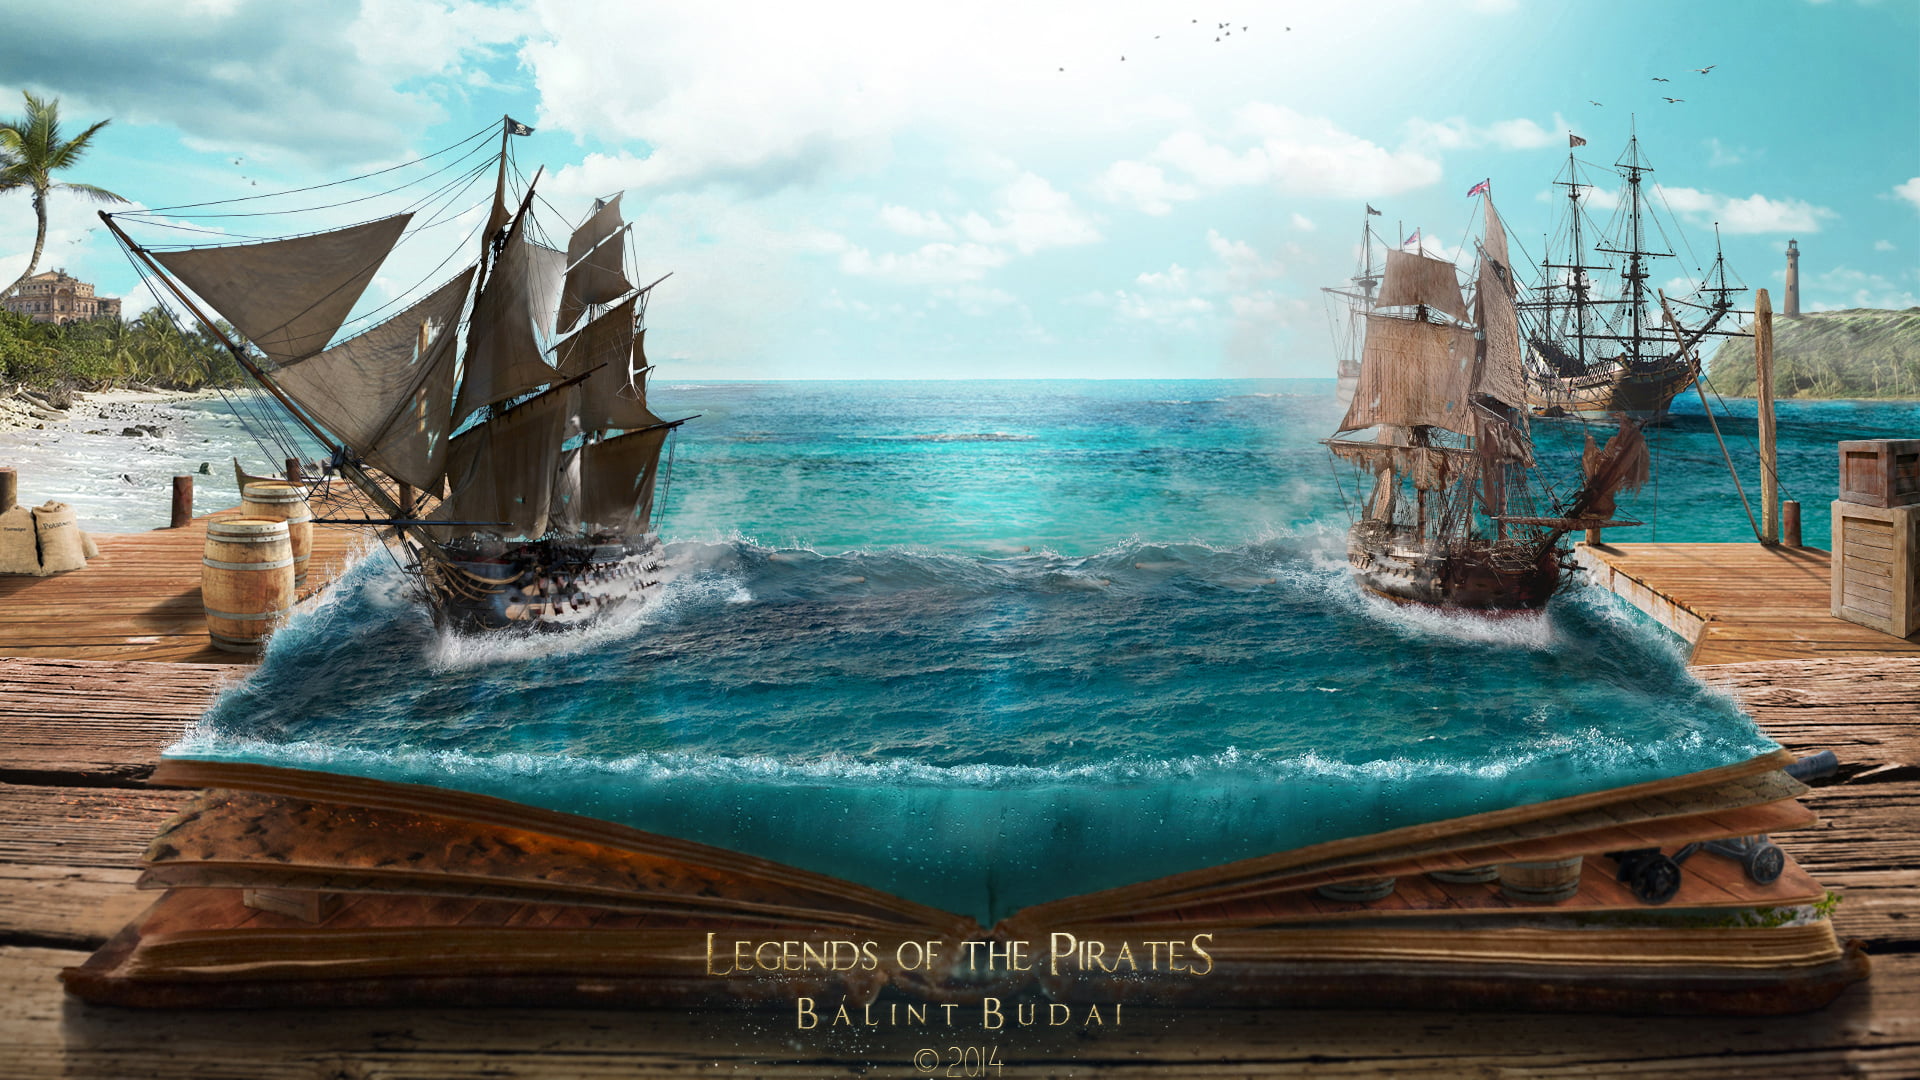 Legends of the Pirates Balint Budai wallpaper, Legends of the Pirates poster